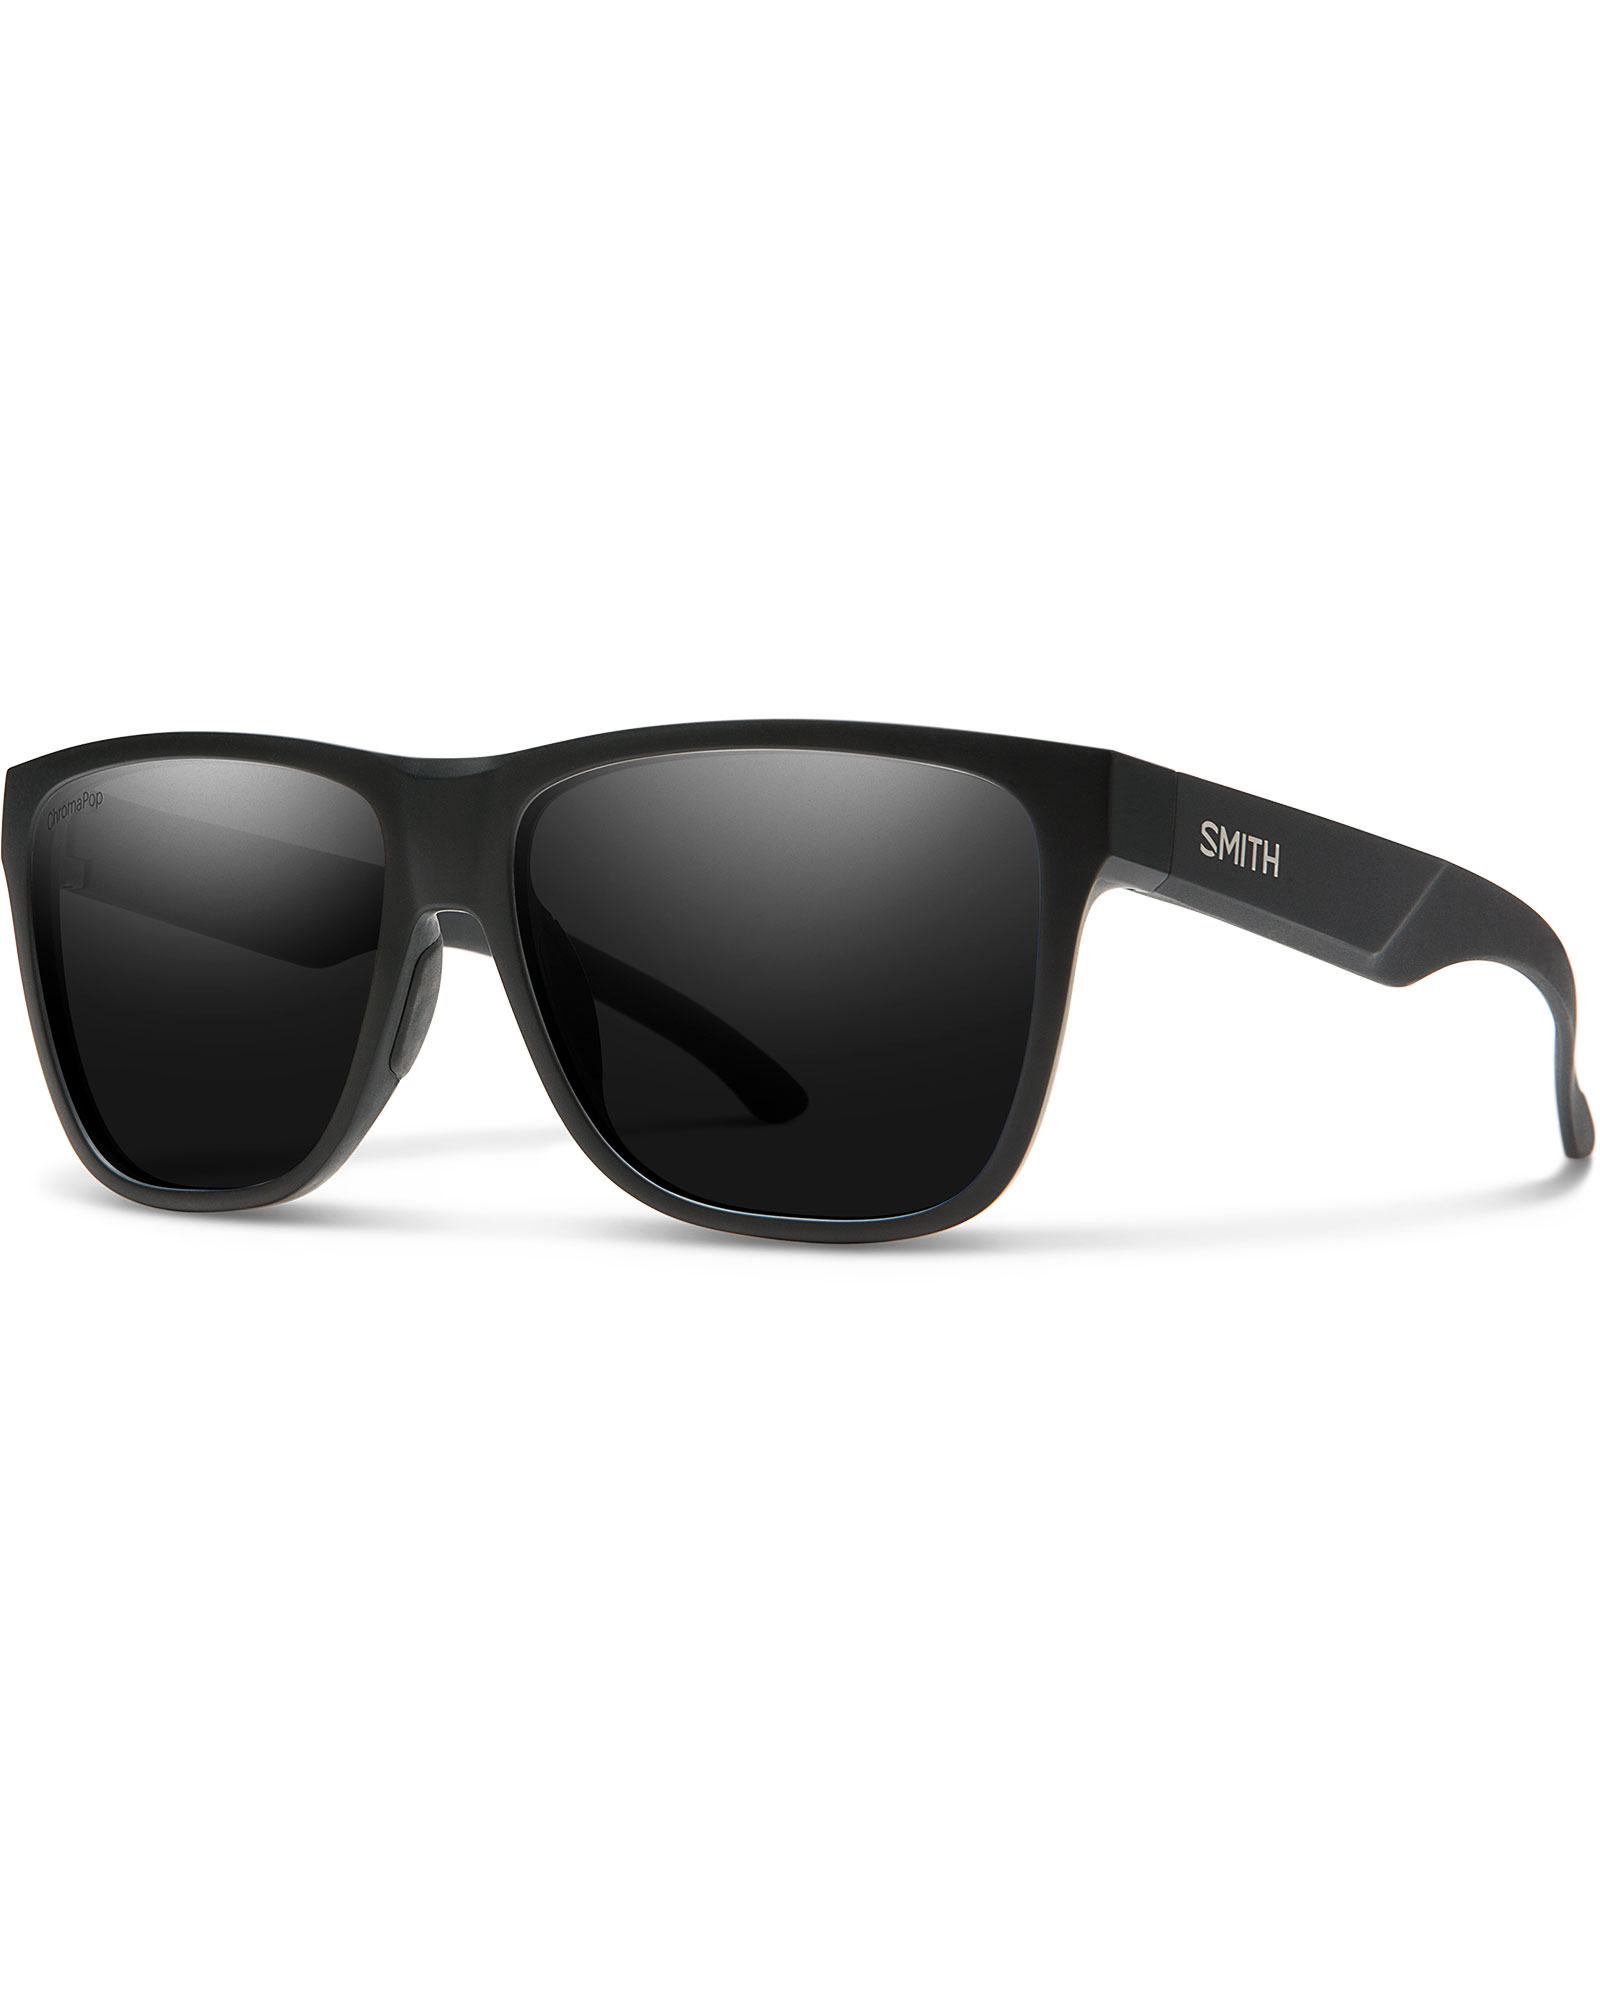 Smith Lowdown XL 2 Sunglasses - Matte Black